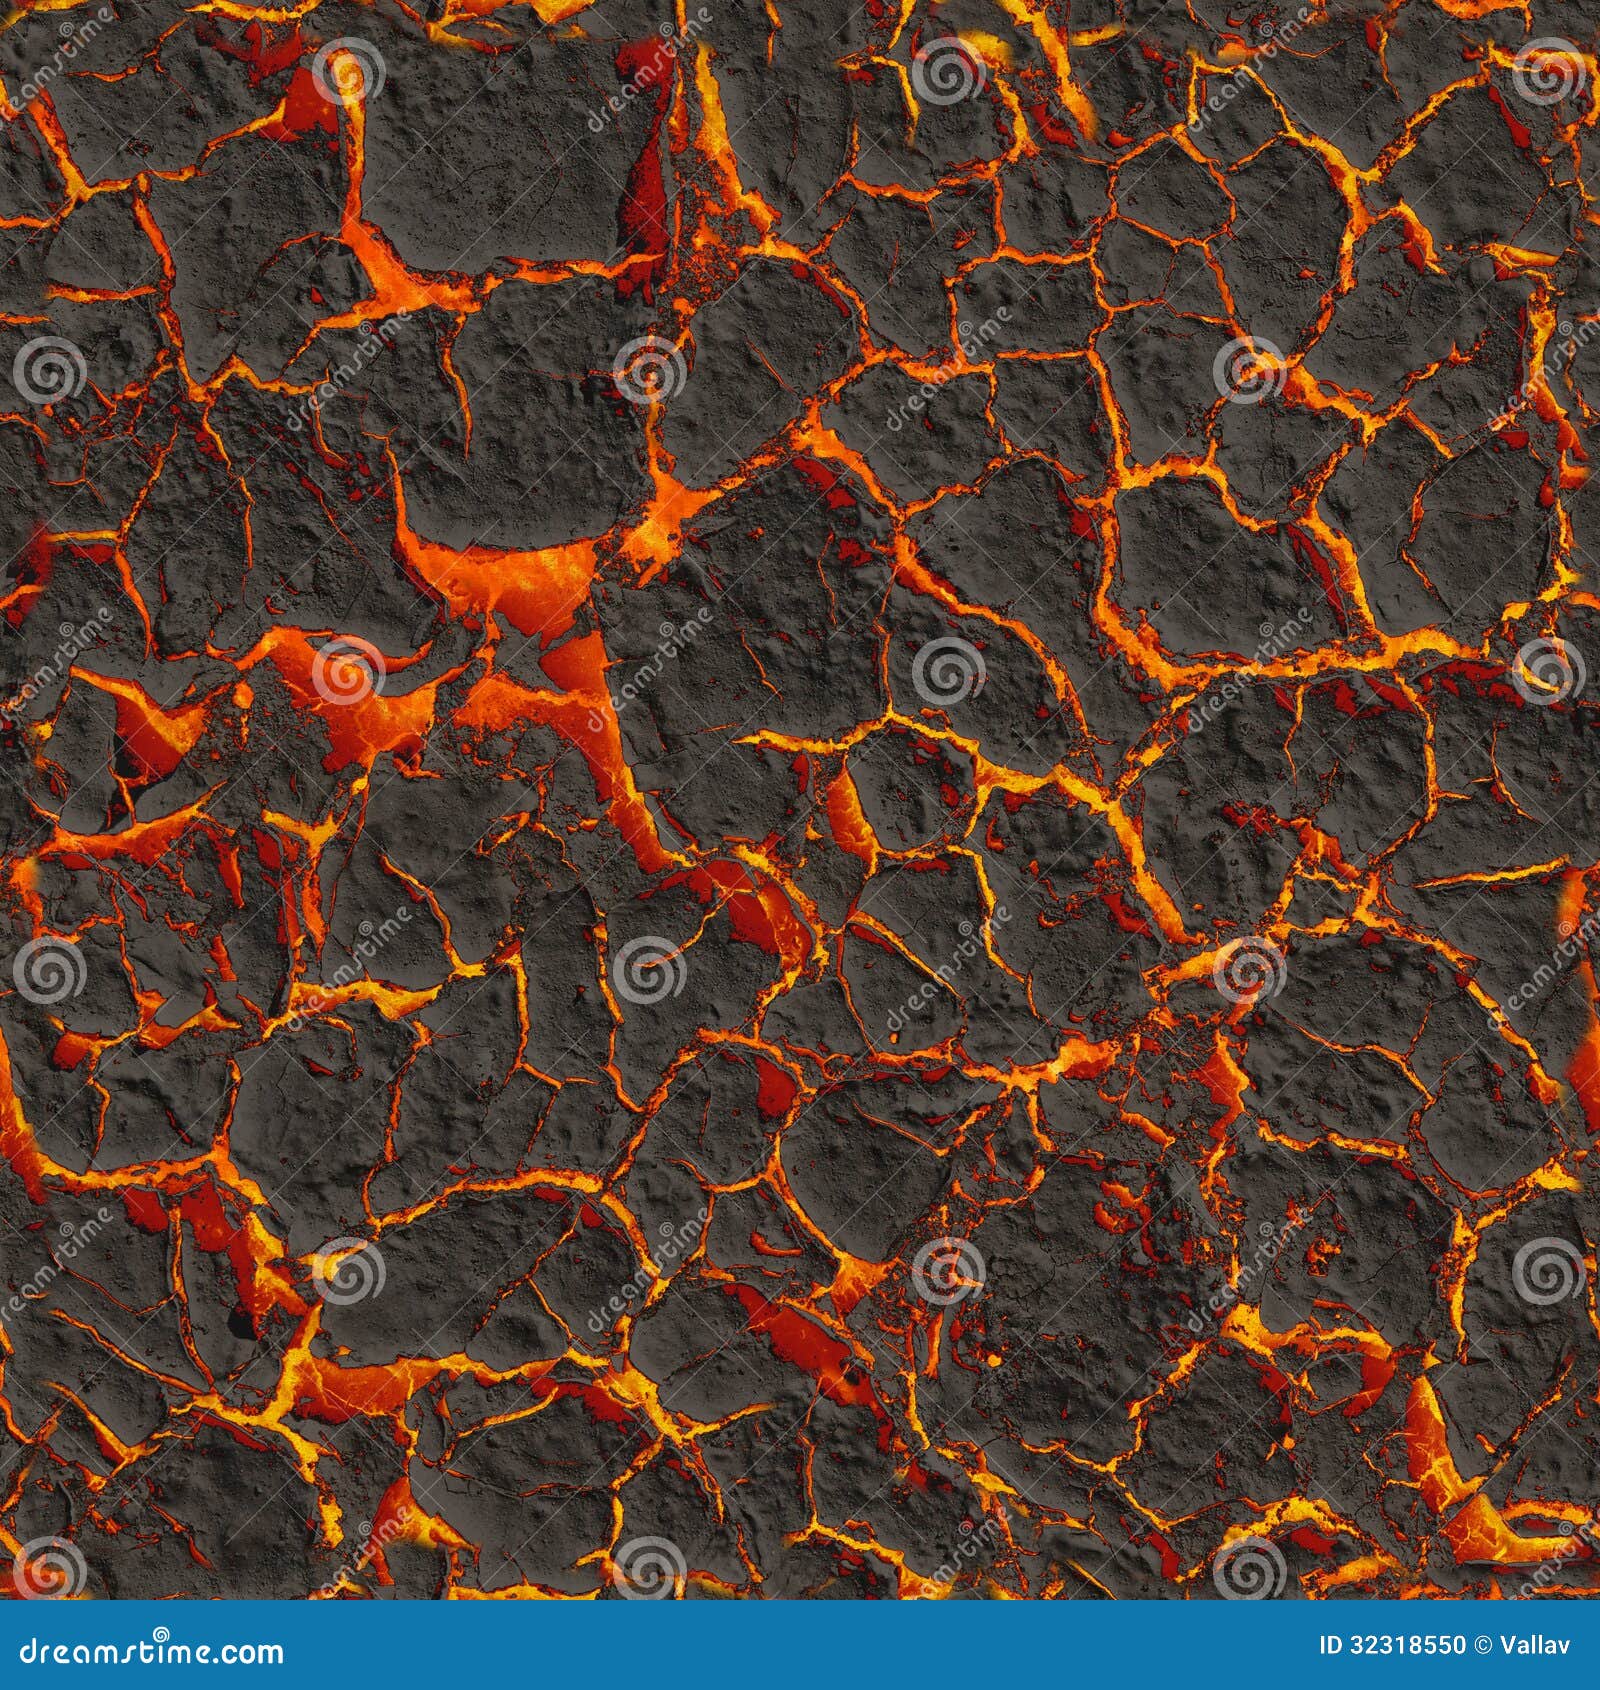 texture fiery lava. seamless image